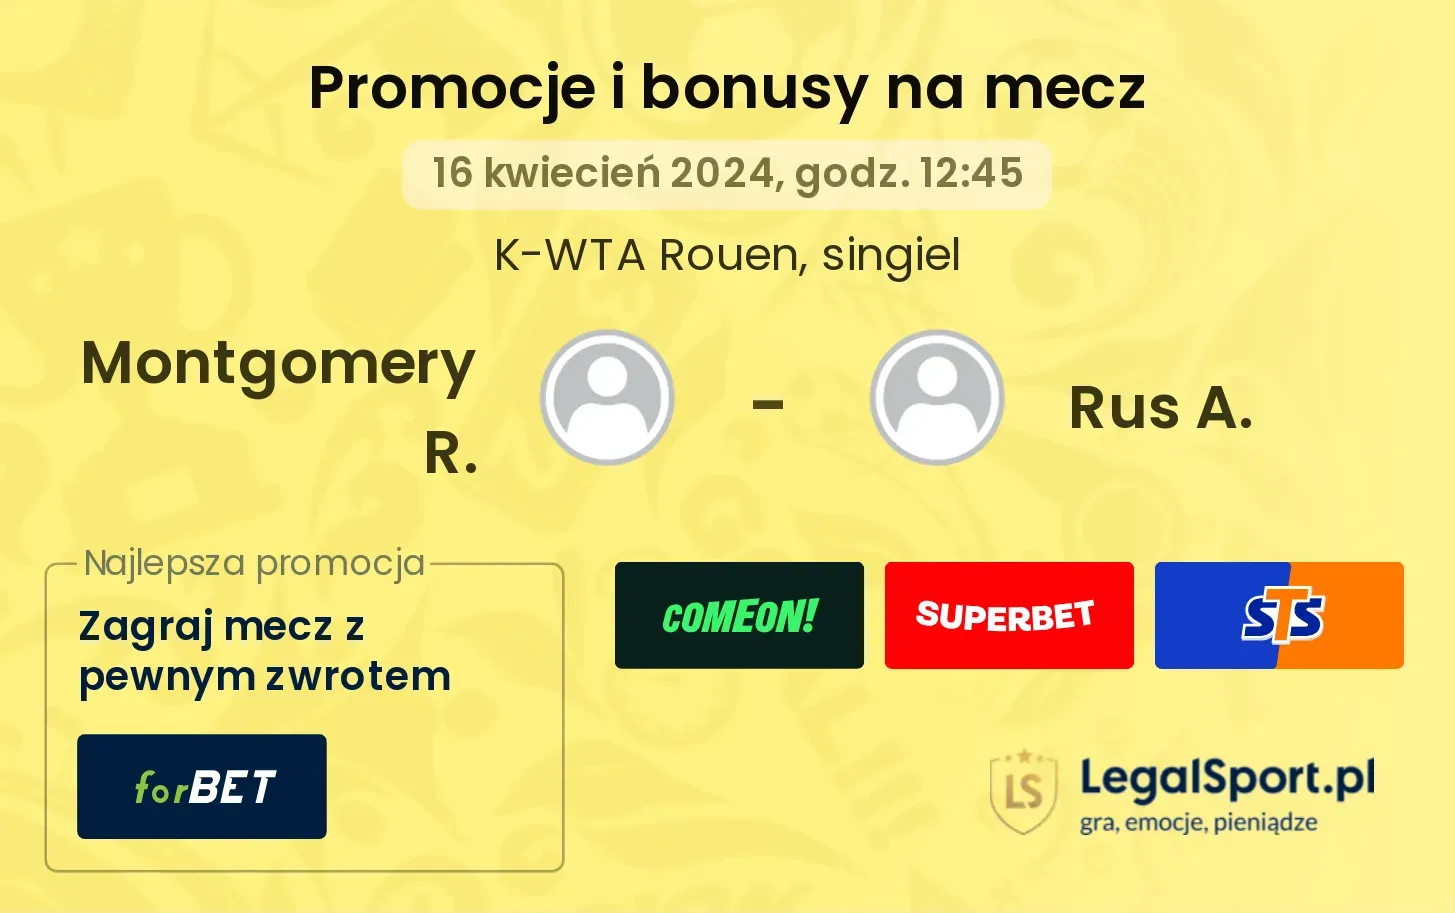 Montgomery R. - Rus A. promocje bonusy na mecz